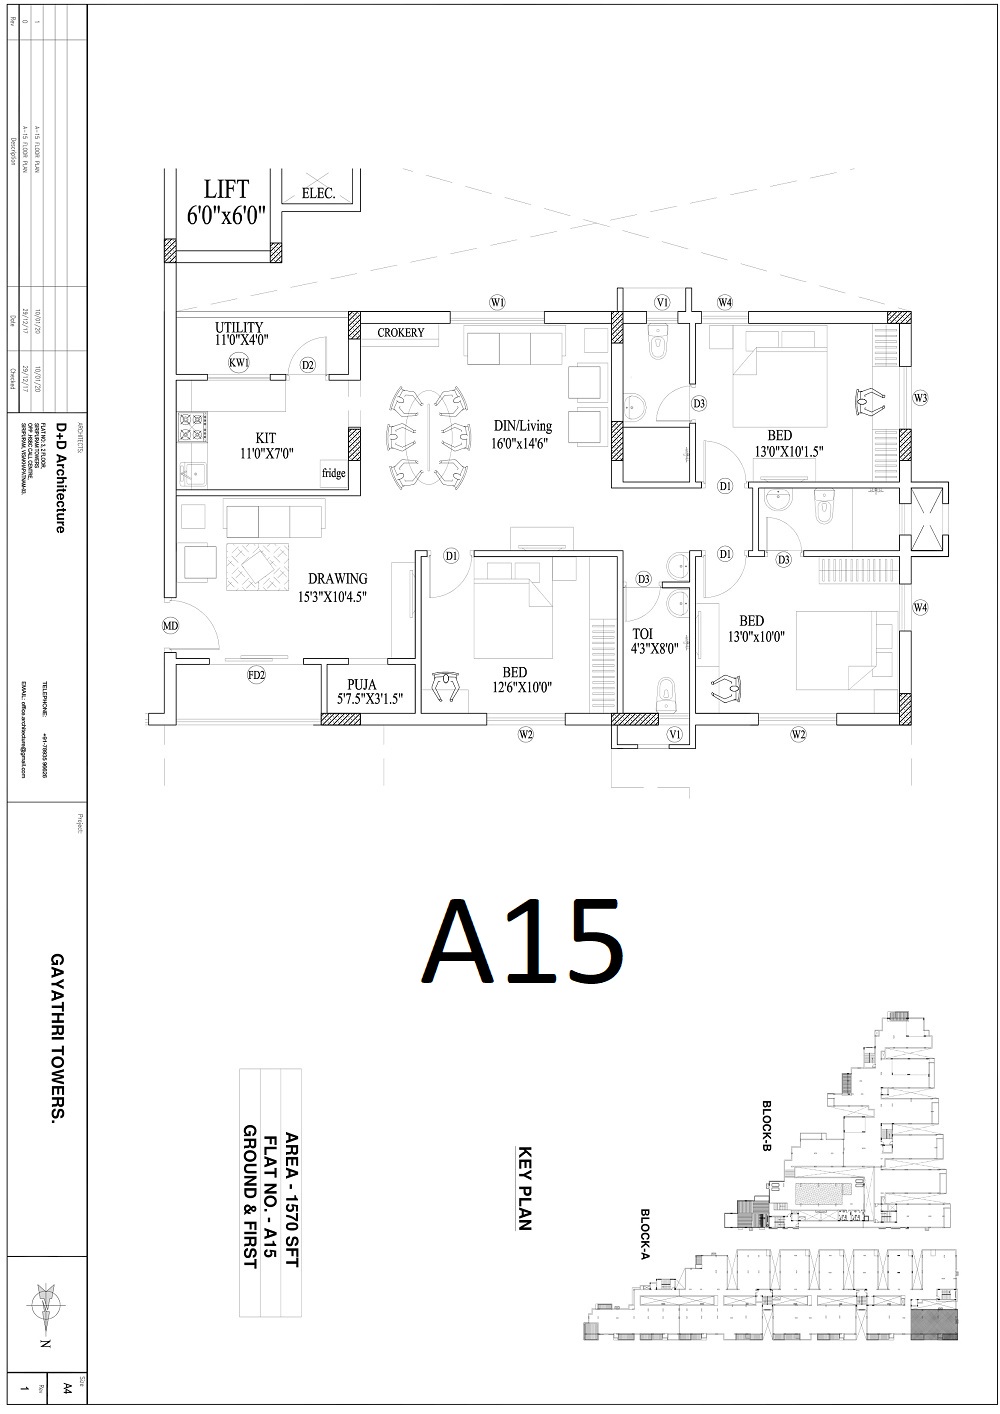 A15 - Floor Plan